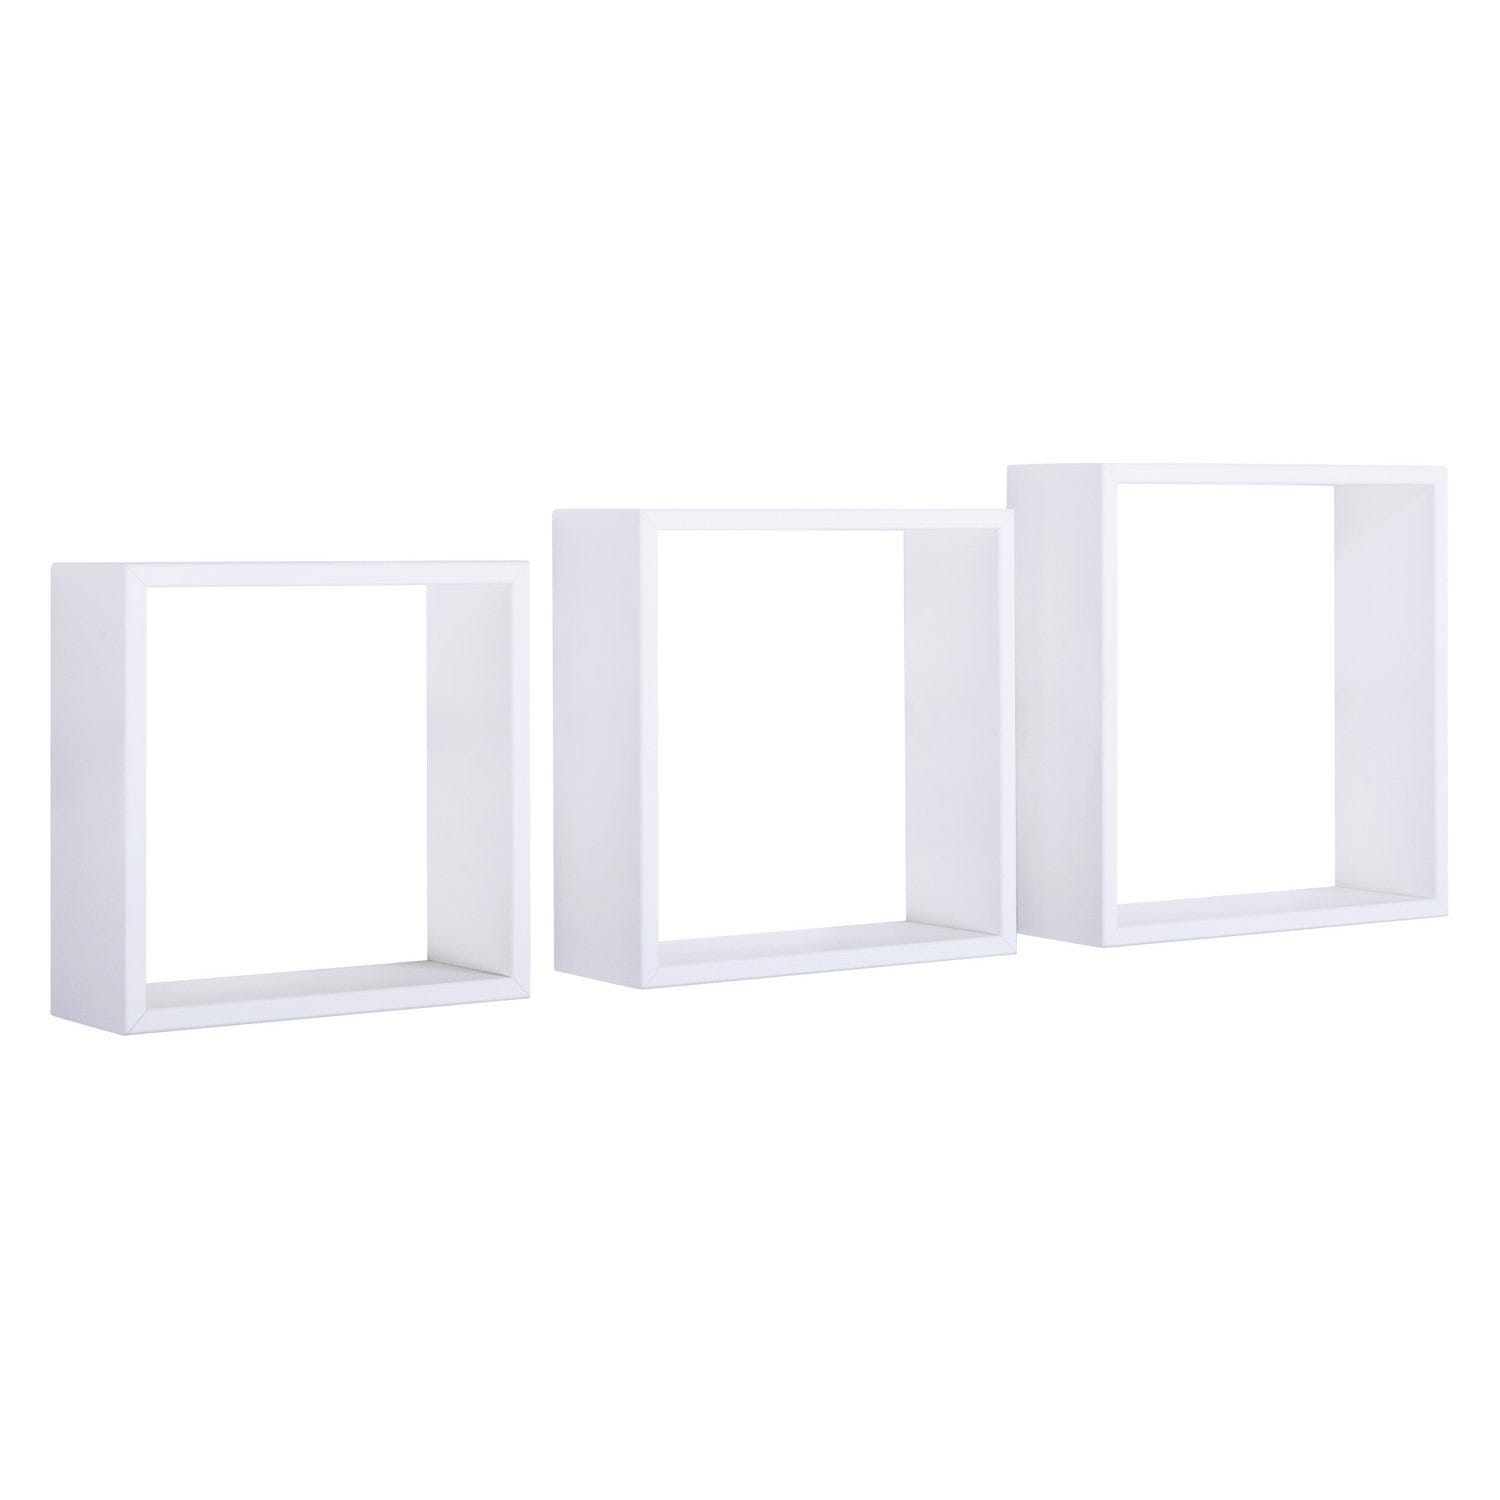 NBrand Mensole cubo quadrate Set 3 pezzi MDF / PVC colore Bianco